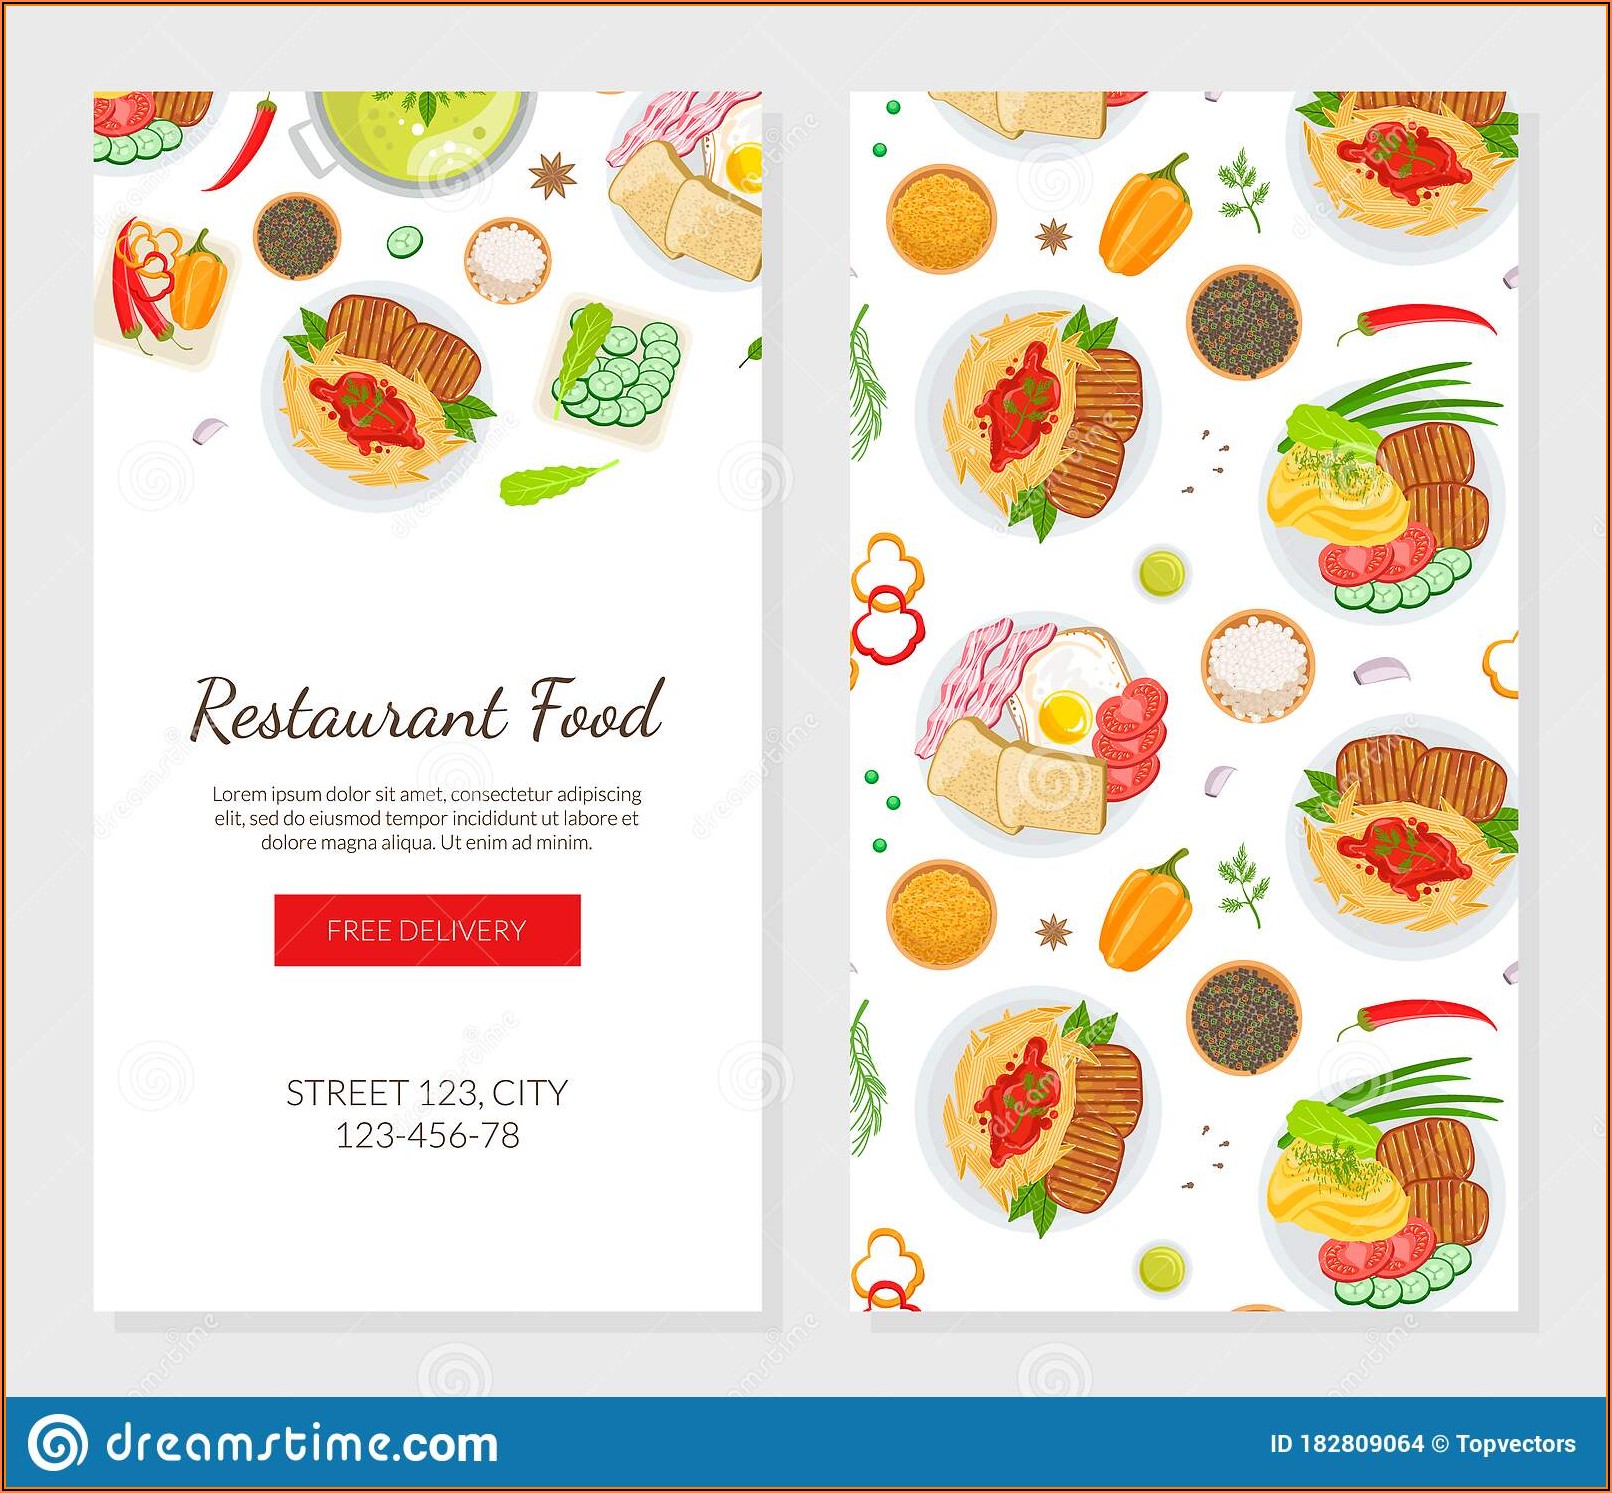 Restaurant Ordering App Template